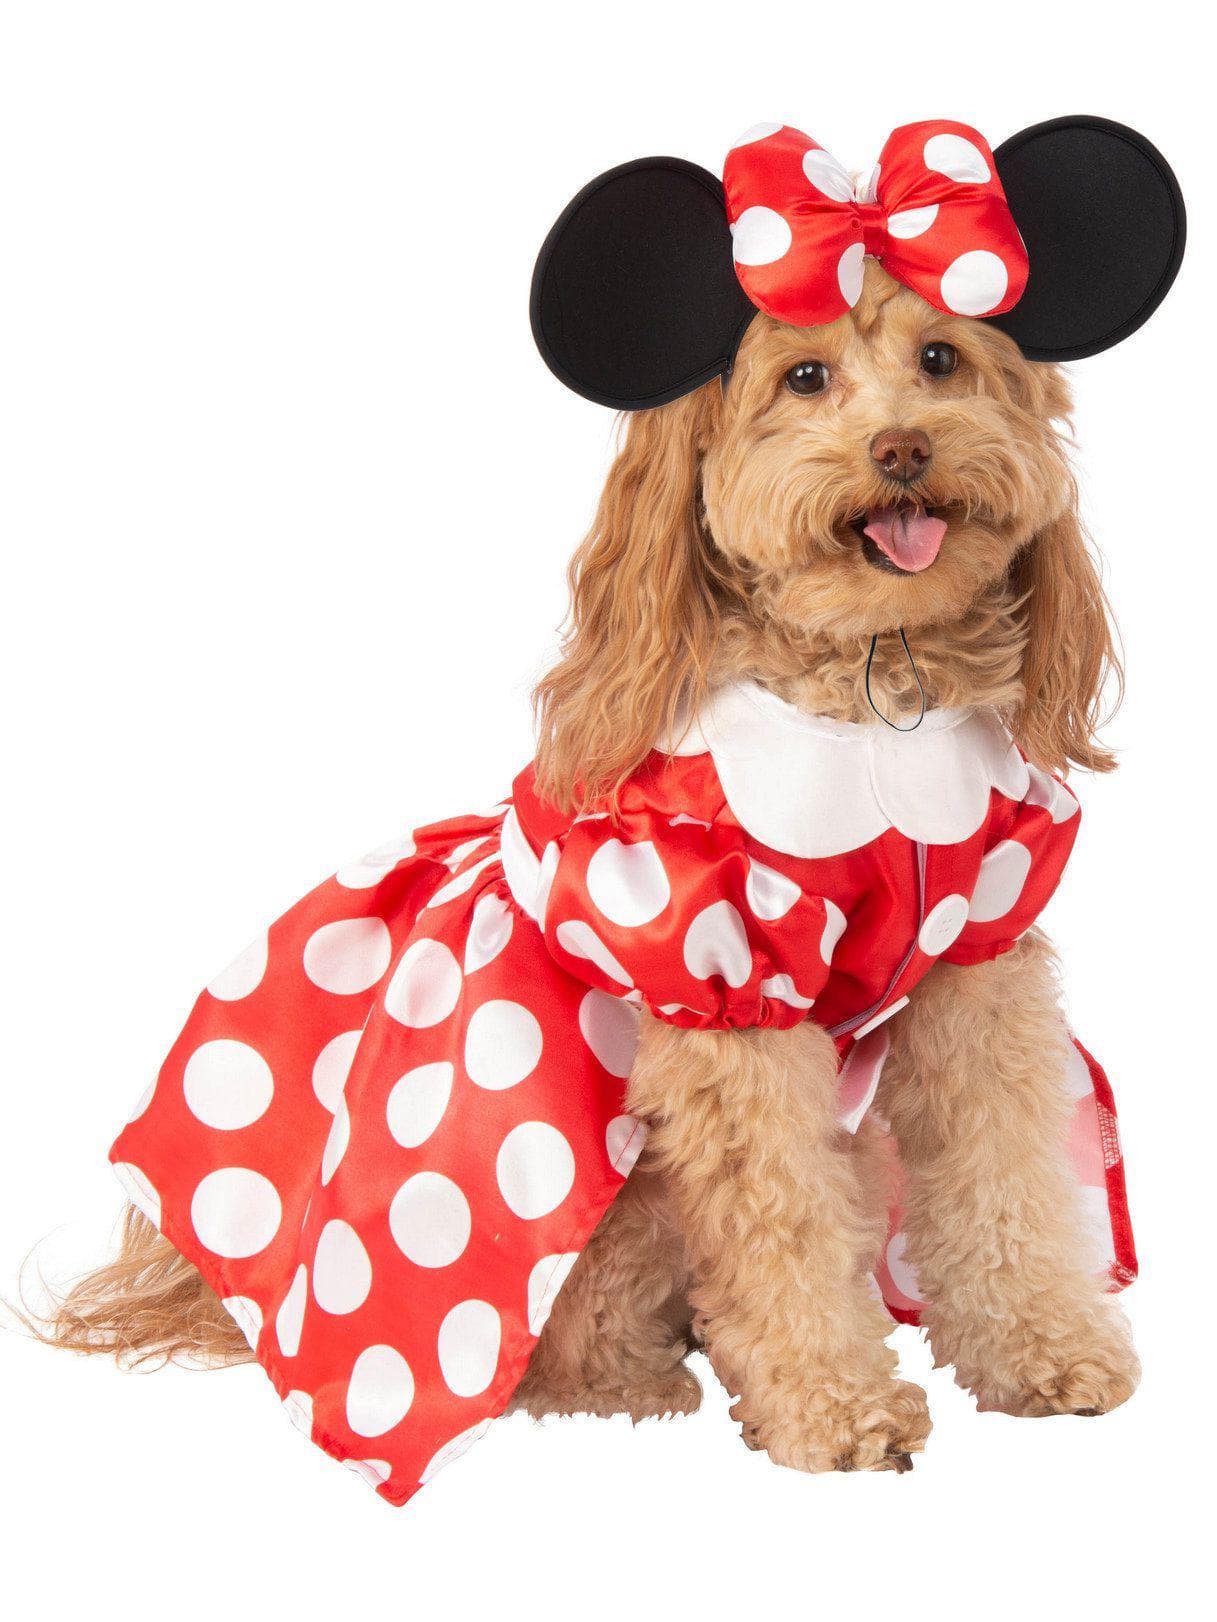 Minnie Mouse Pet Costume - costumes.com